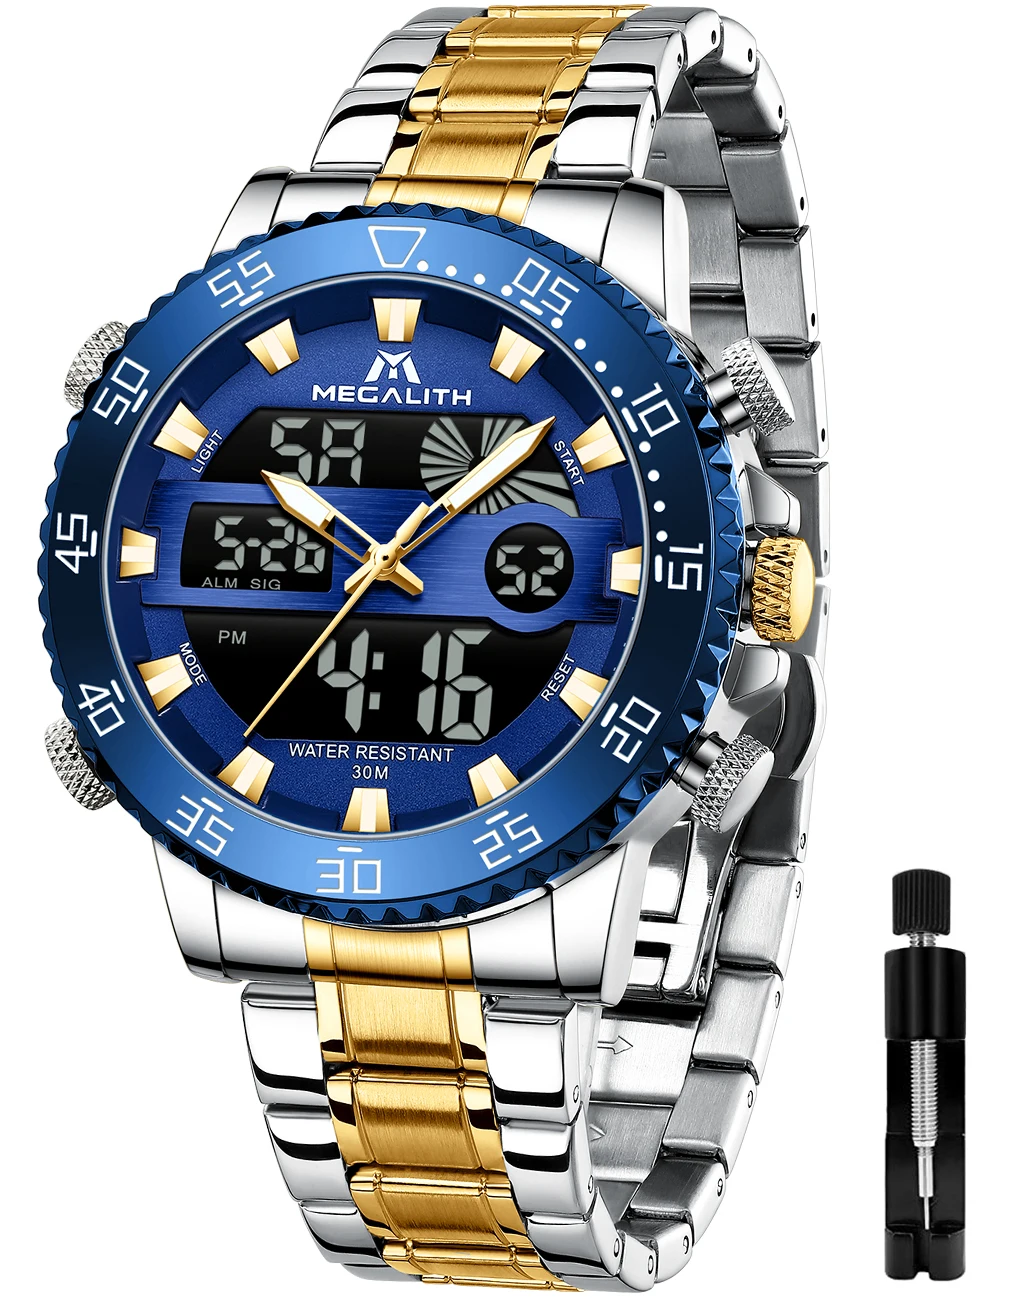 

MEGALITH Analog Military Digital Watches Men Sport Quartz Wristwatch for Men Luxury Brand Waterproof Clock Man Steel Watch 8222